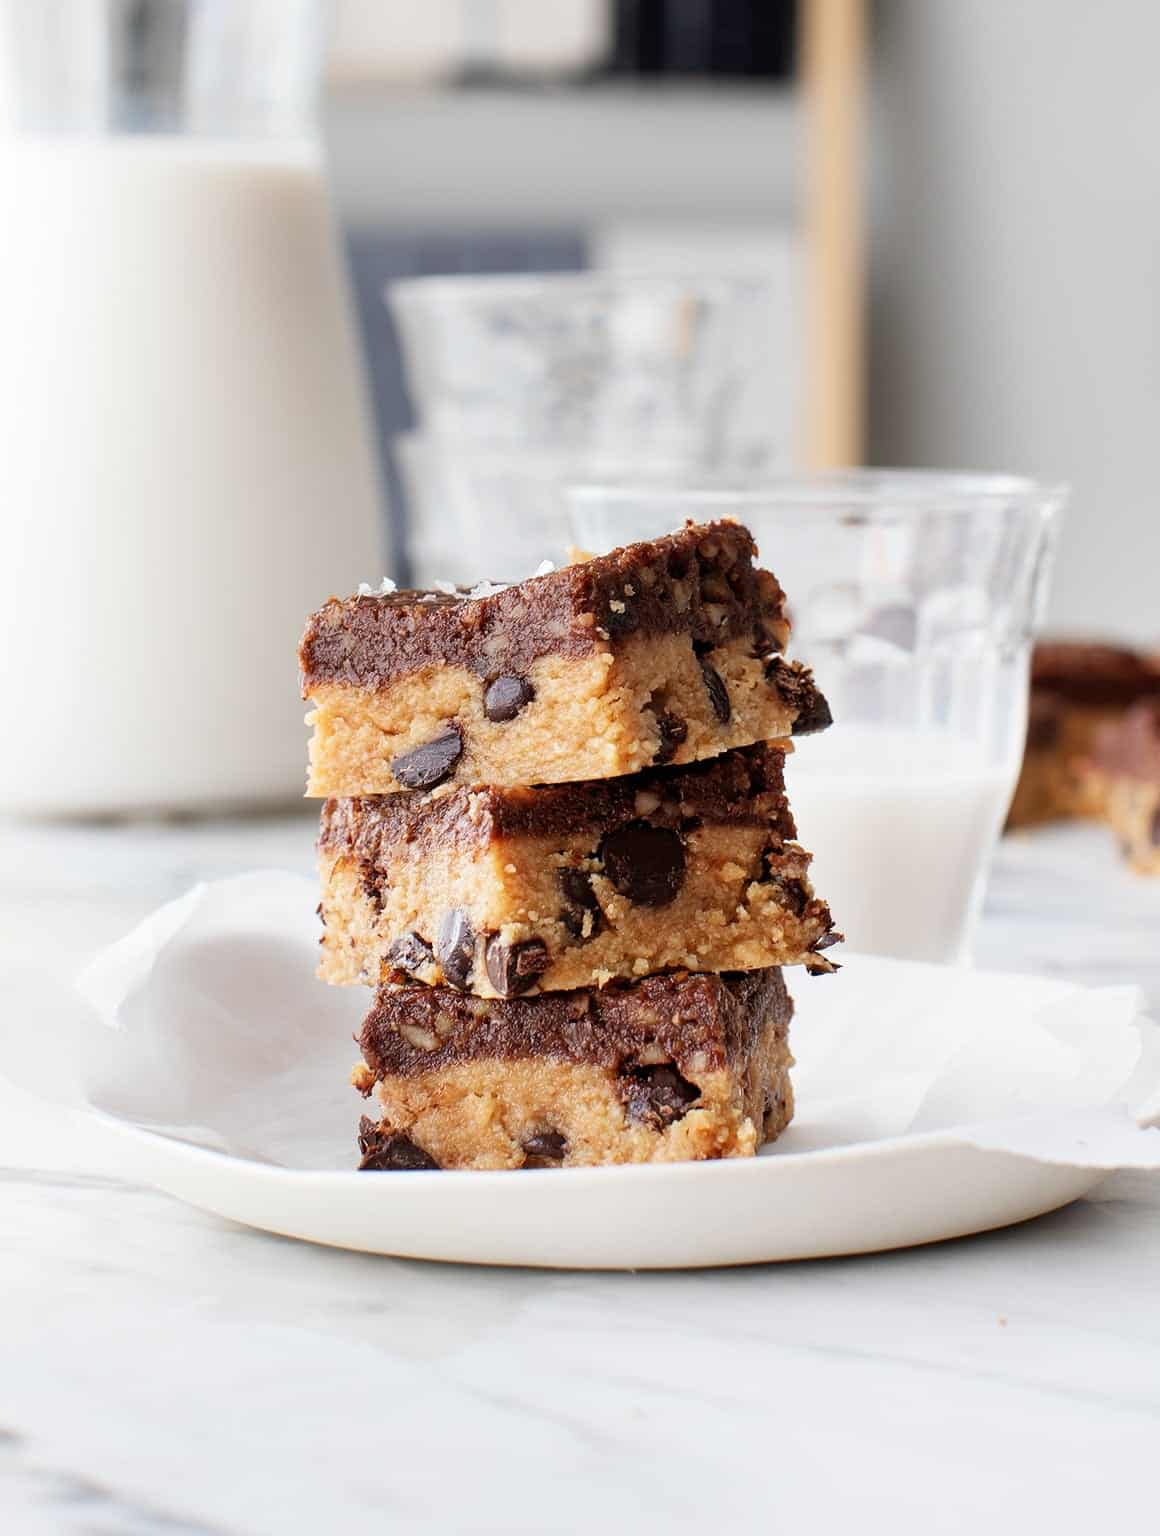 no-bake desserts
peanut butter cookie bars